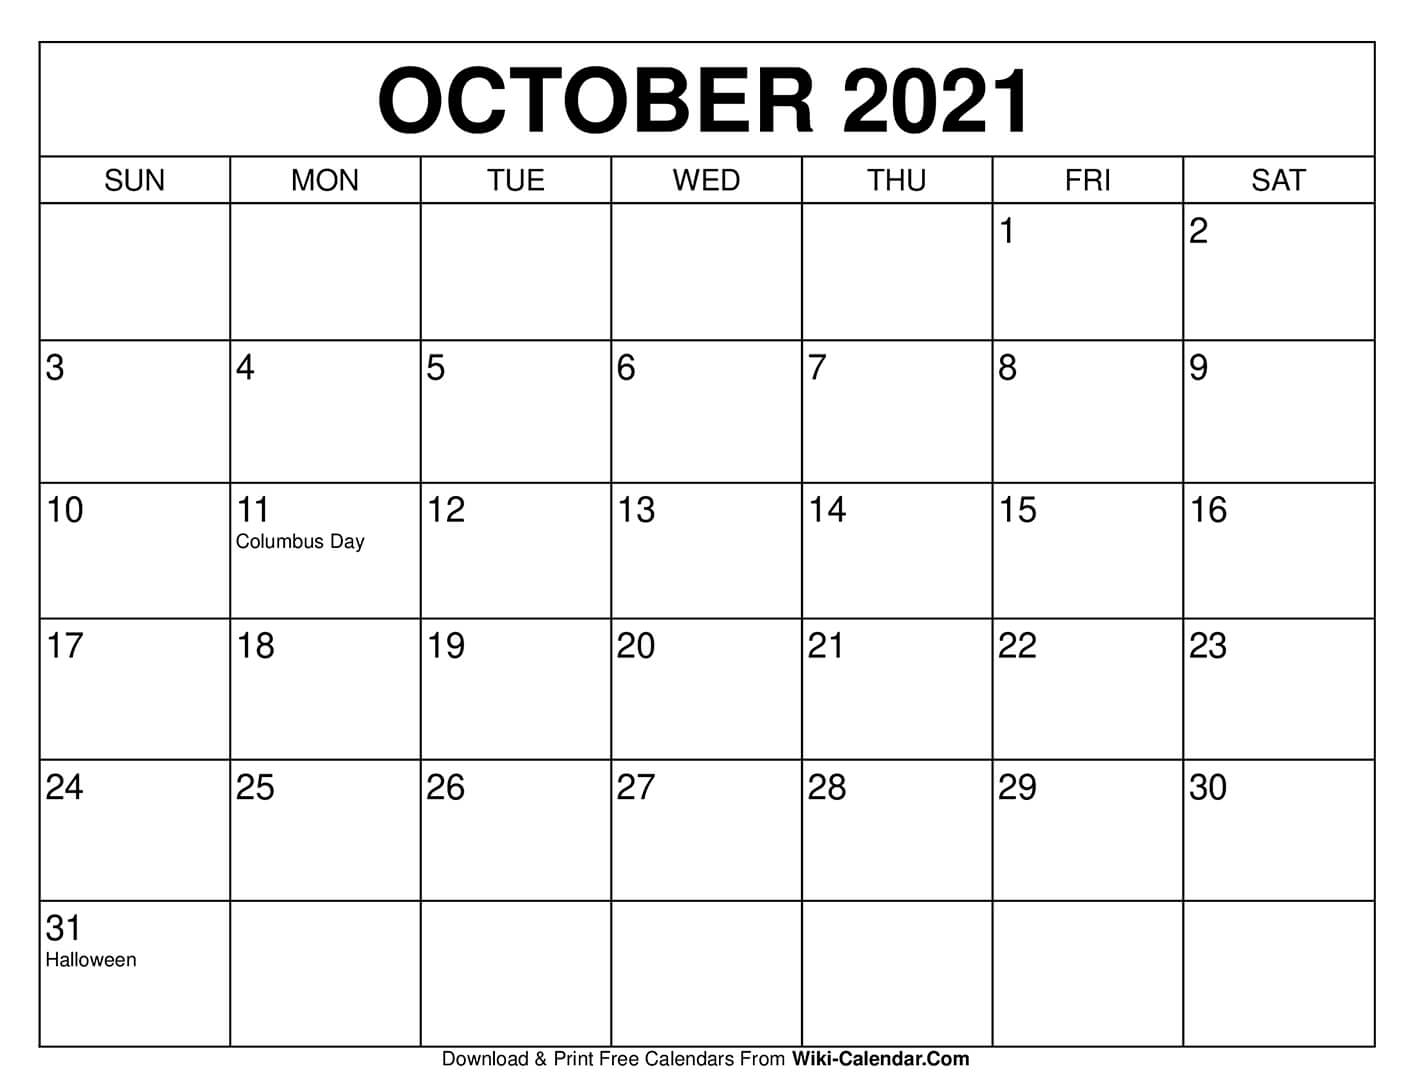 Get Free Printable October 2021 Calendar